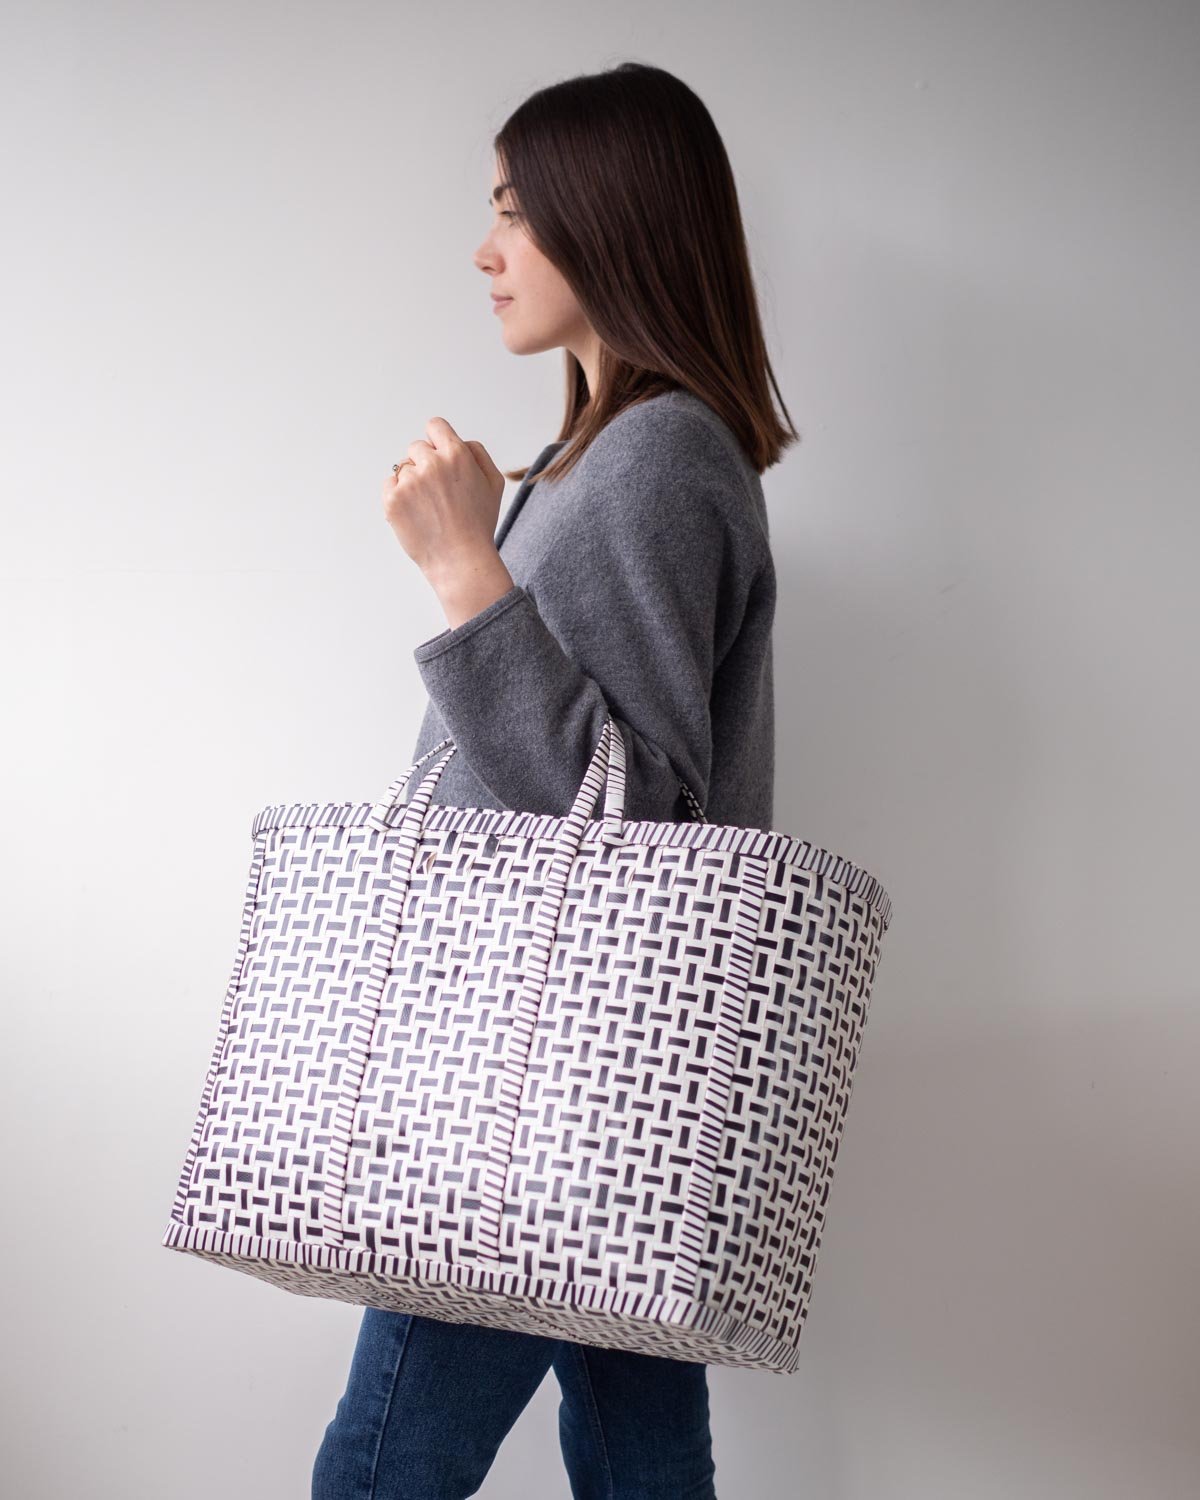 Original Basket in Black & White | Shopper Bag - YGN Collective